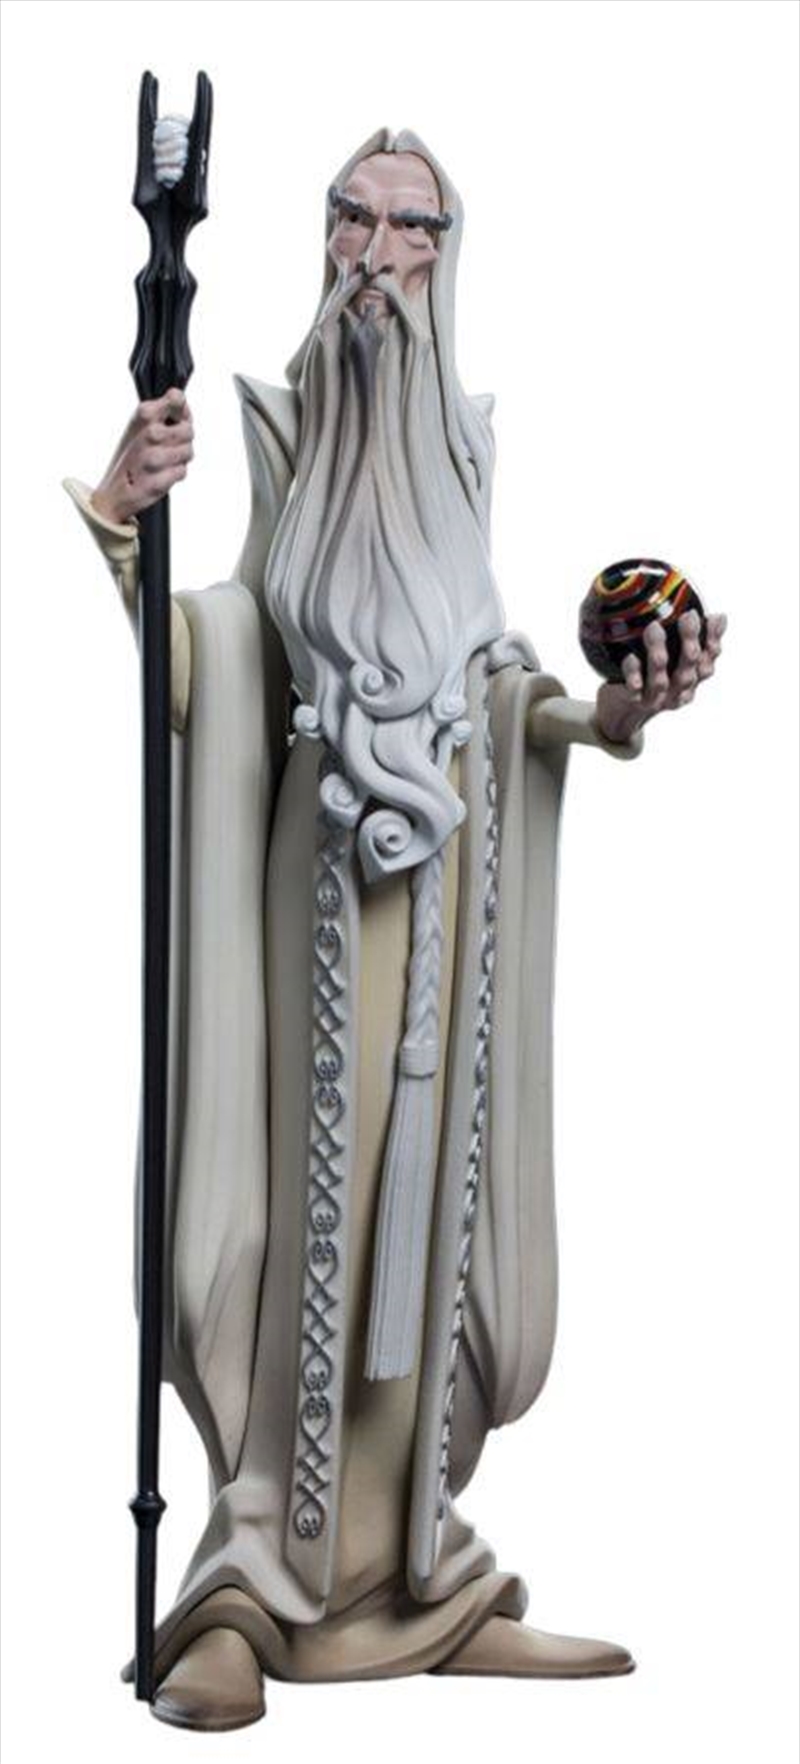 Lord of the Rings - Saruman Mini Epics Vinyl Figure/Product Detail/Figurines